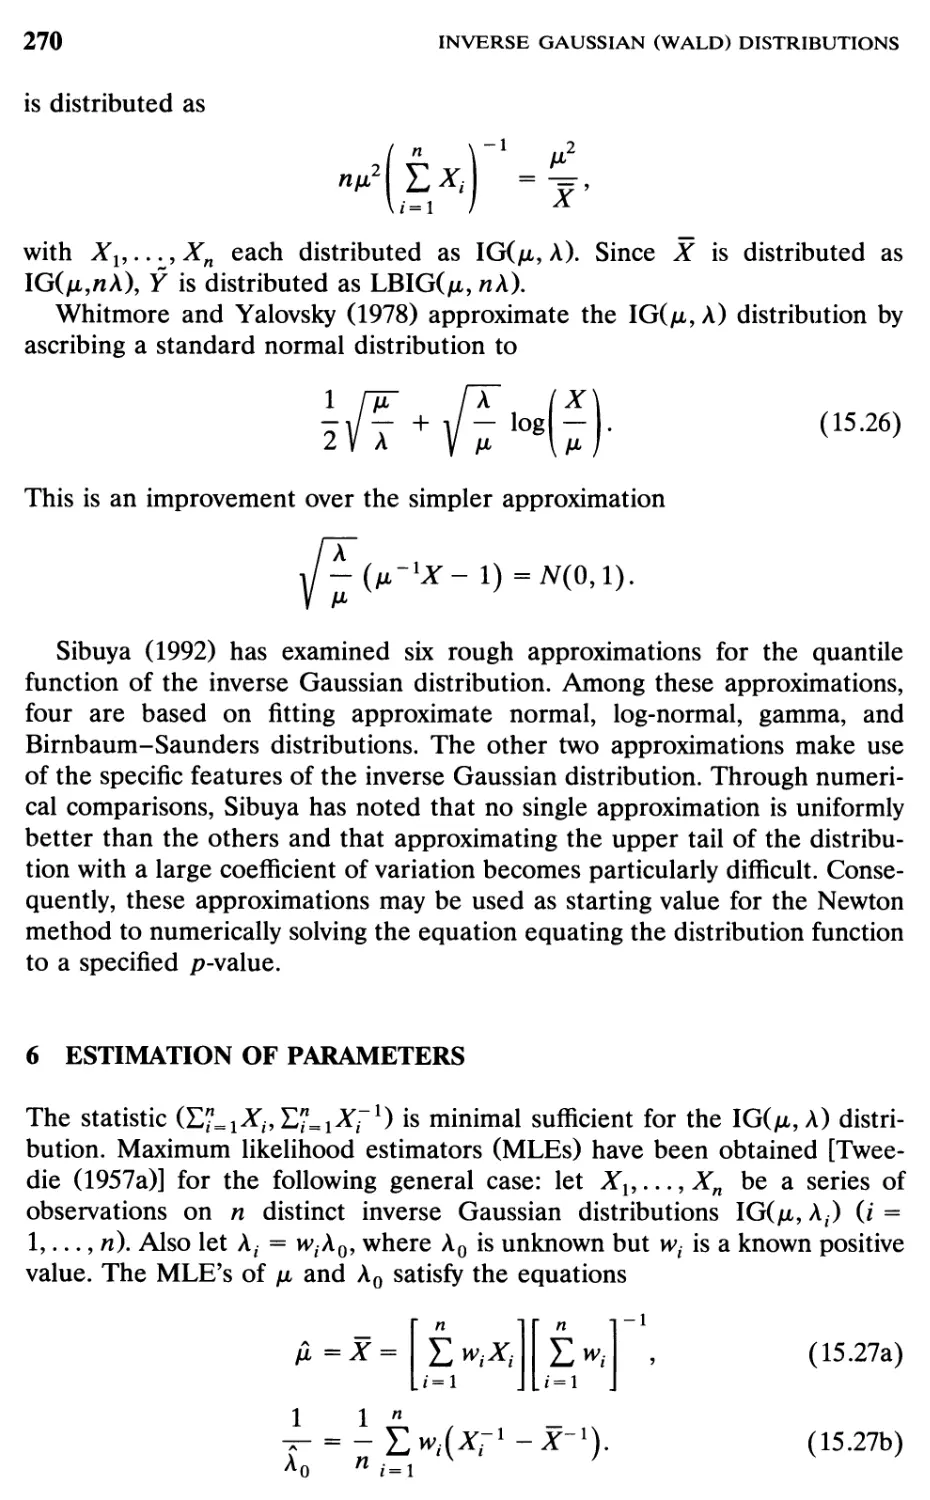 6 Estimation of Parameters, 270